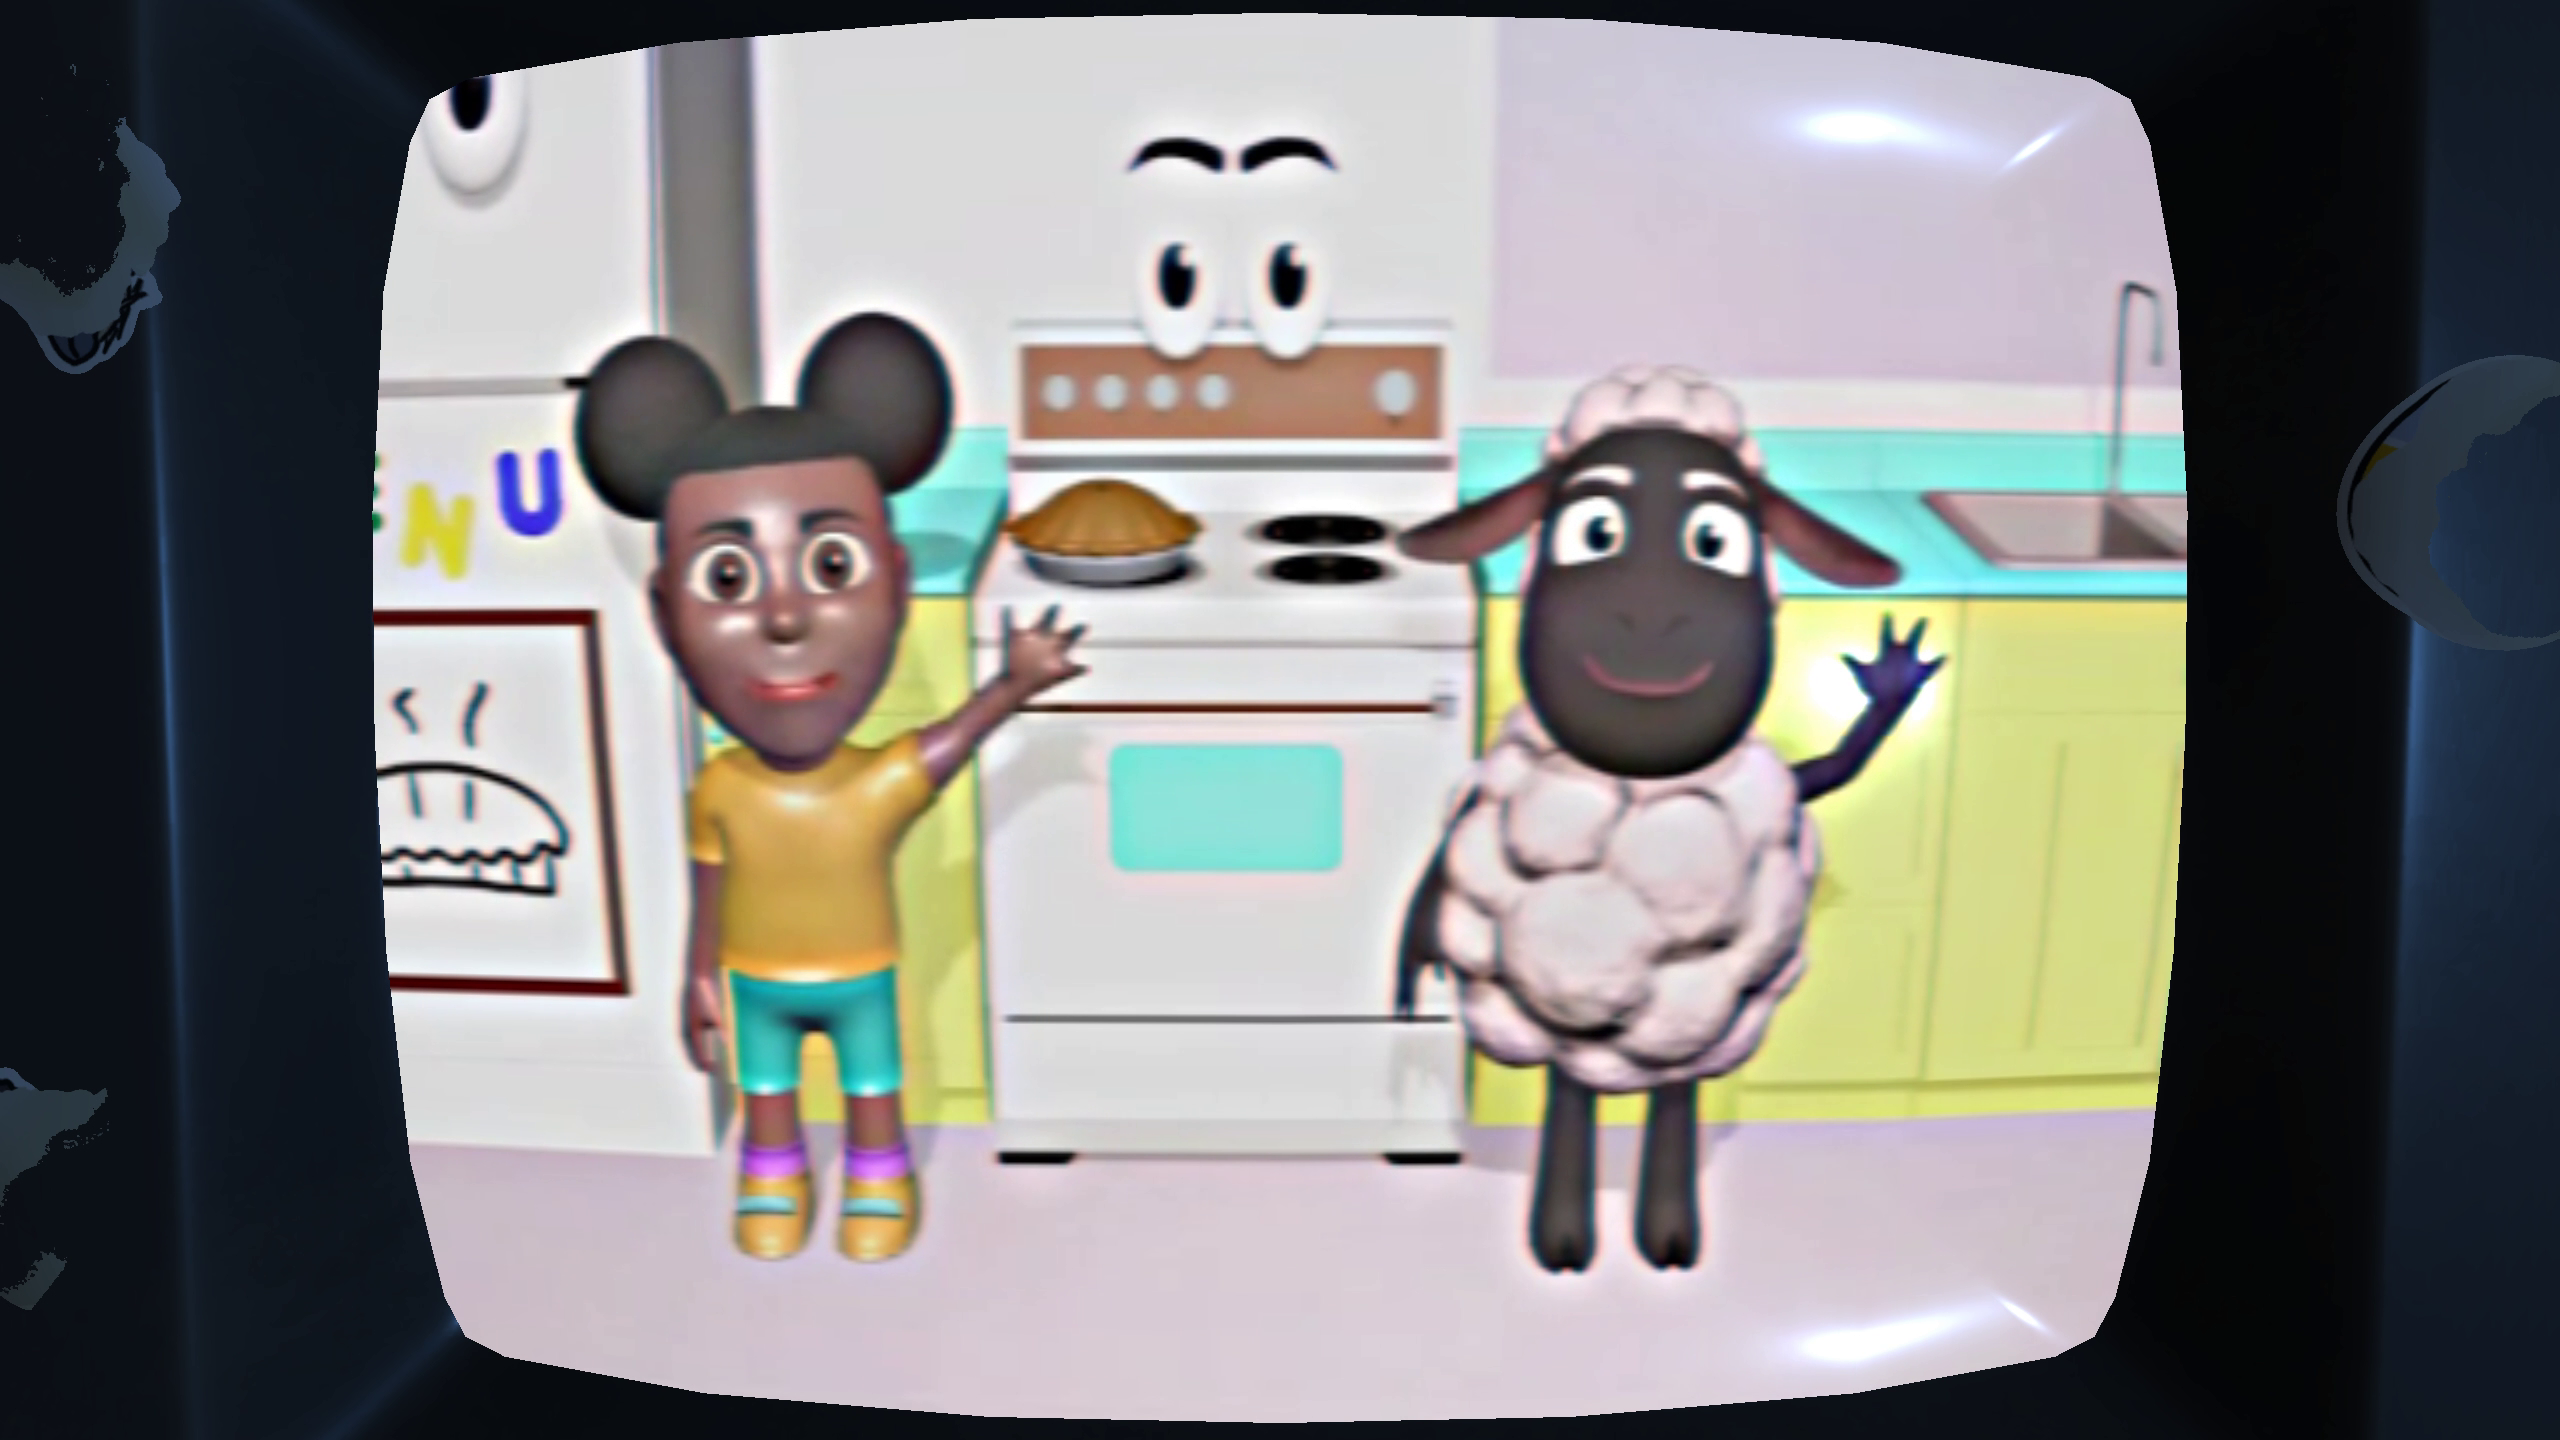 Children's Cartoon-Themed Horror Game 'Amanda the Adventurer' Brings Fun,  Friendship & FEAR - Rely on Horror